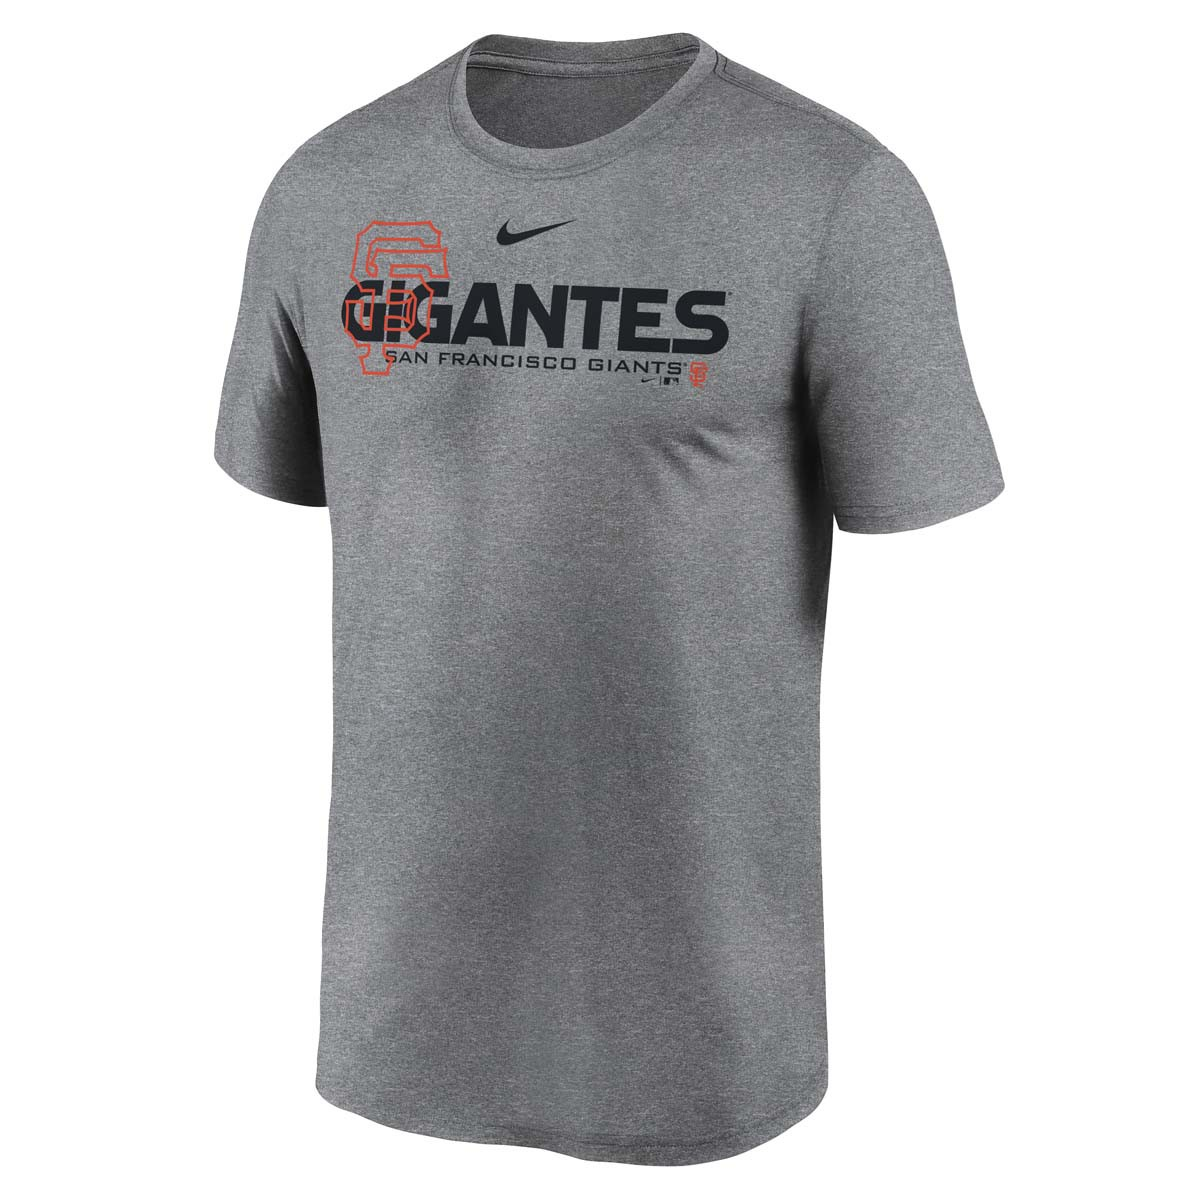 Nike San Francisco Giants Gigantes T-Shirt